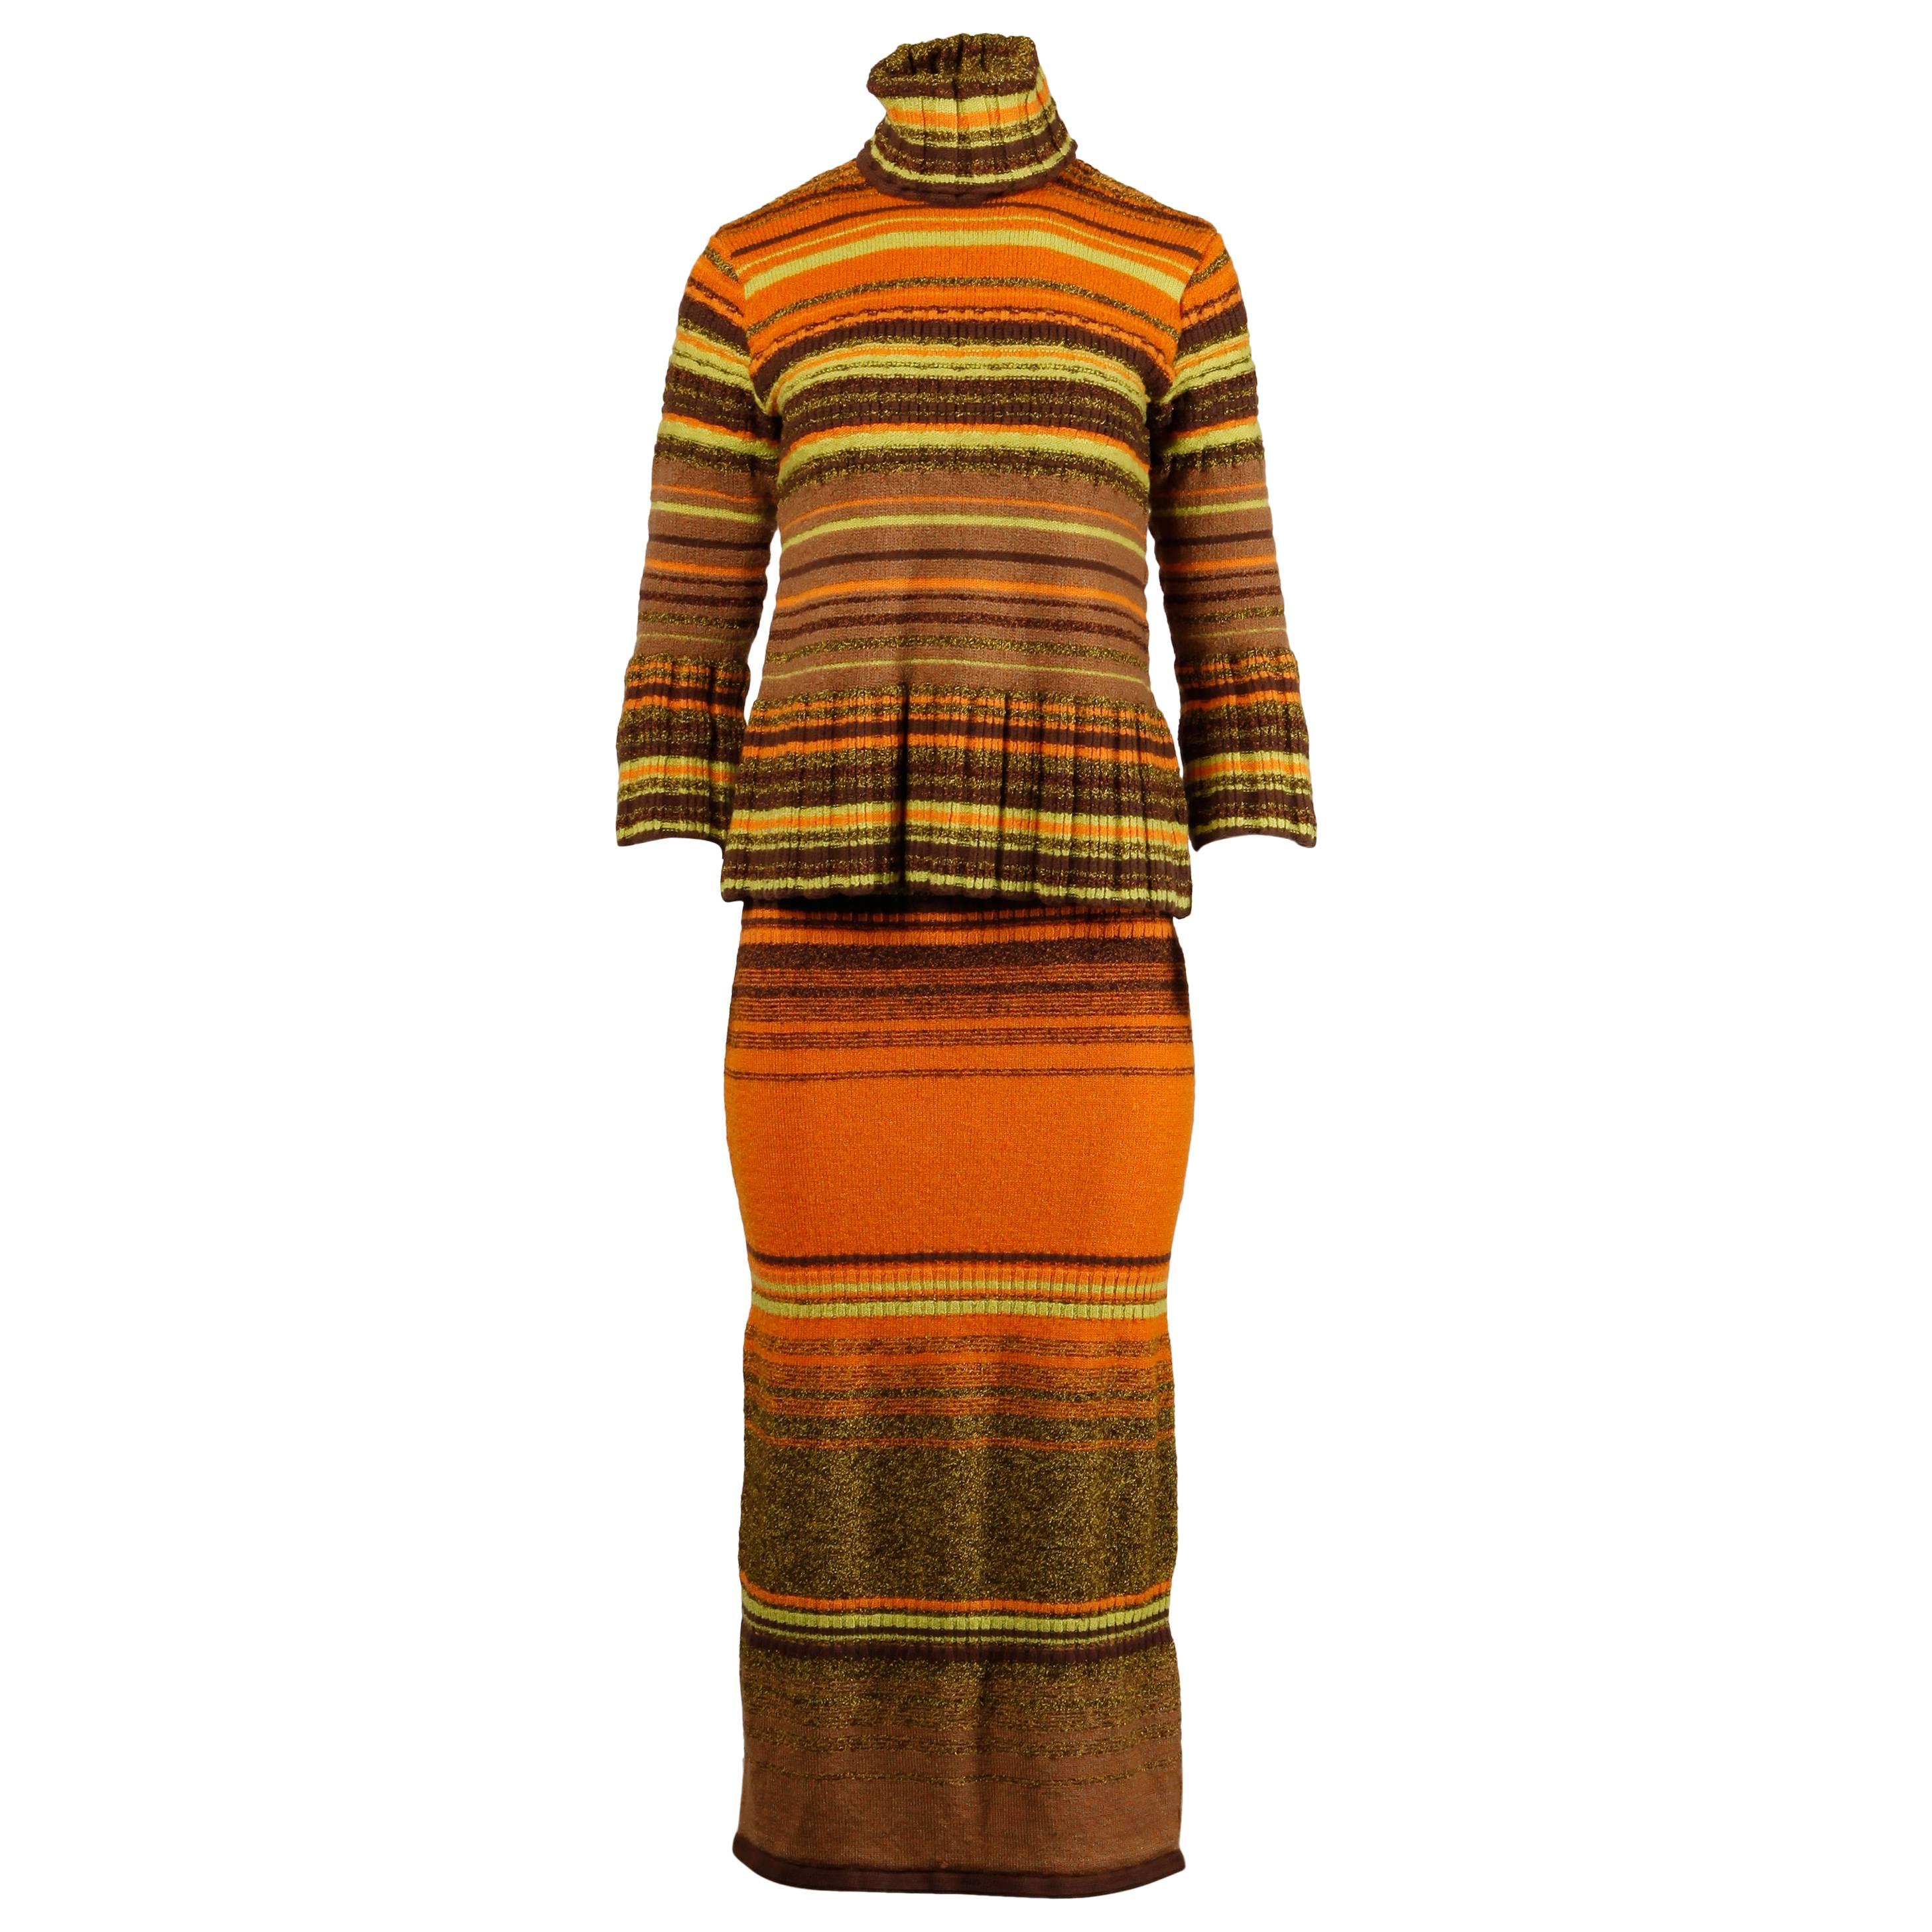 Christian Lacroix Vintage 1990s Striped Knit Wool Sweater + Skirt Dress Ensemble